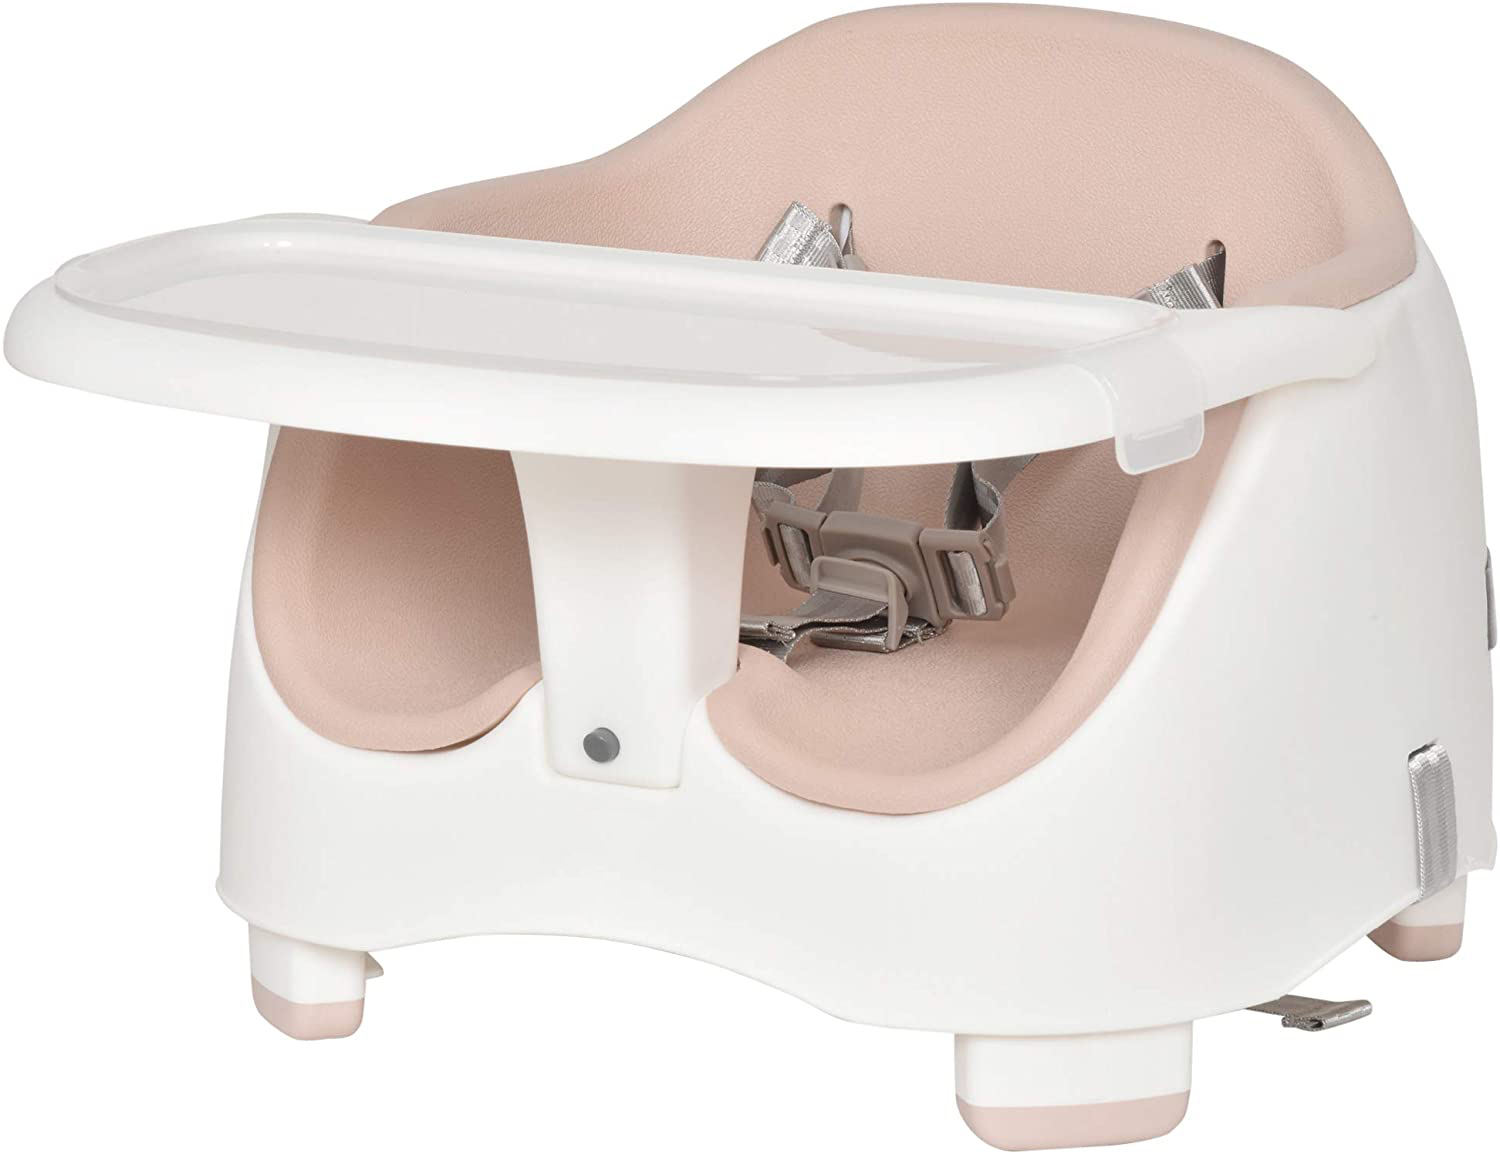 Finehope ブースターダイニングテーブル 1/6 ポータブル幼児食事椅子座席プラスチックシートシットアップチェアミーベビーシート